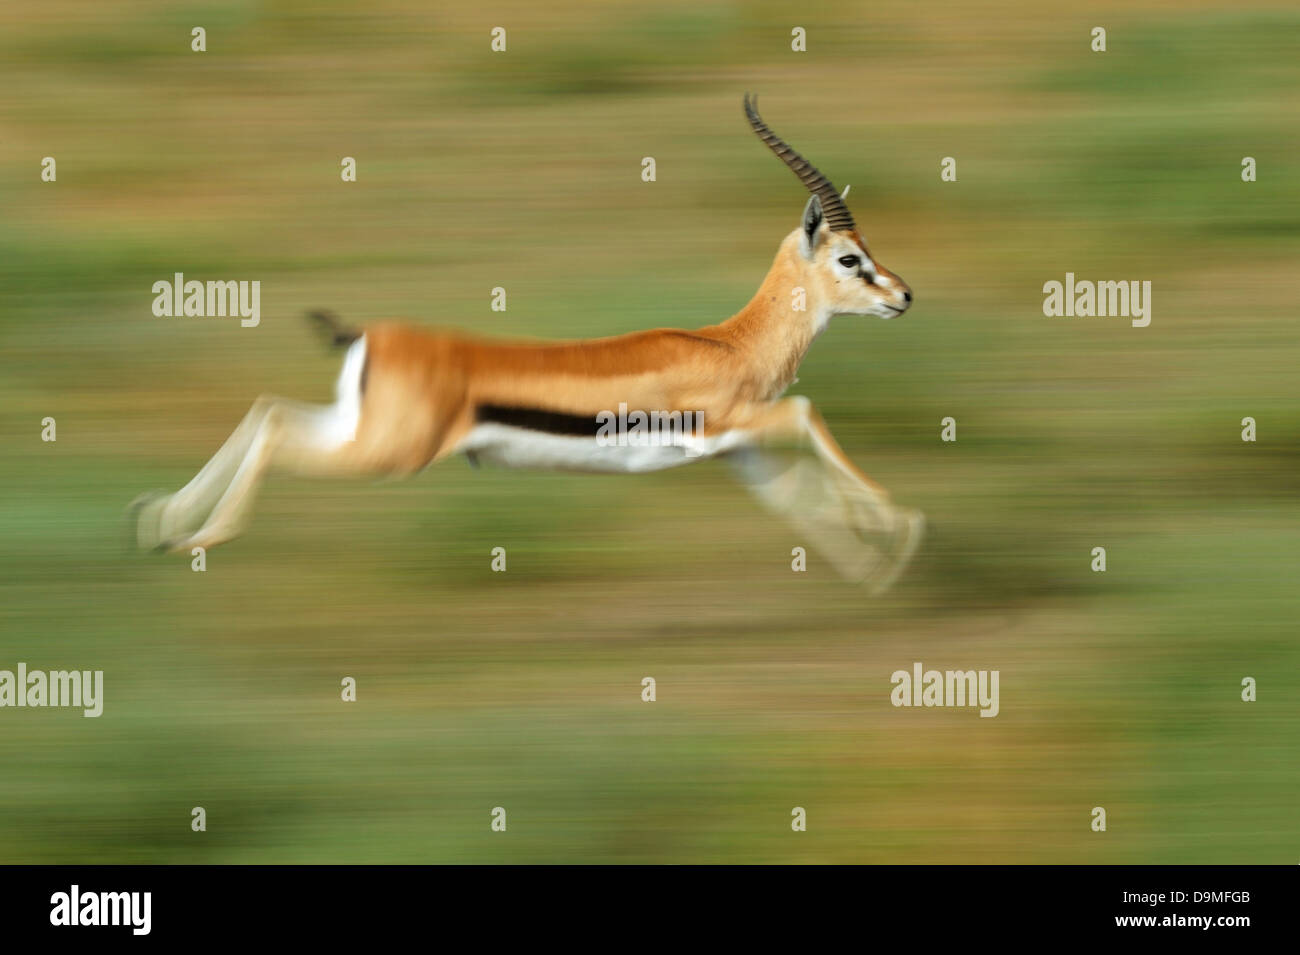 Thomson gazelle running, Serengeti, Tanzania Stock Photo